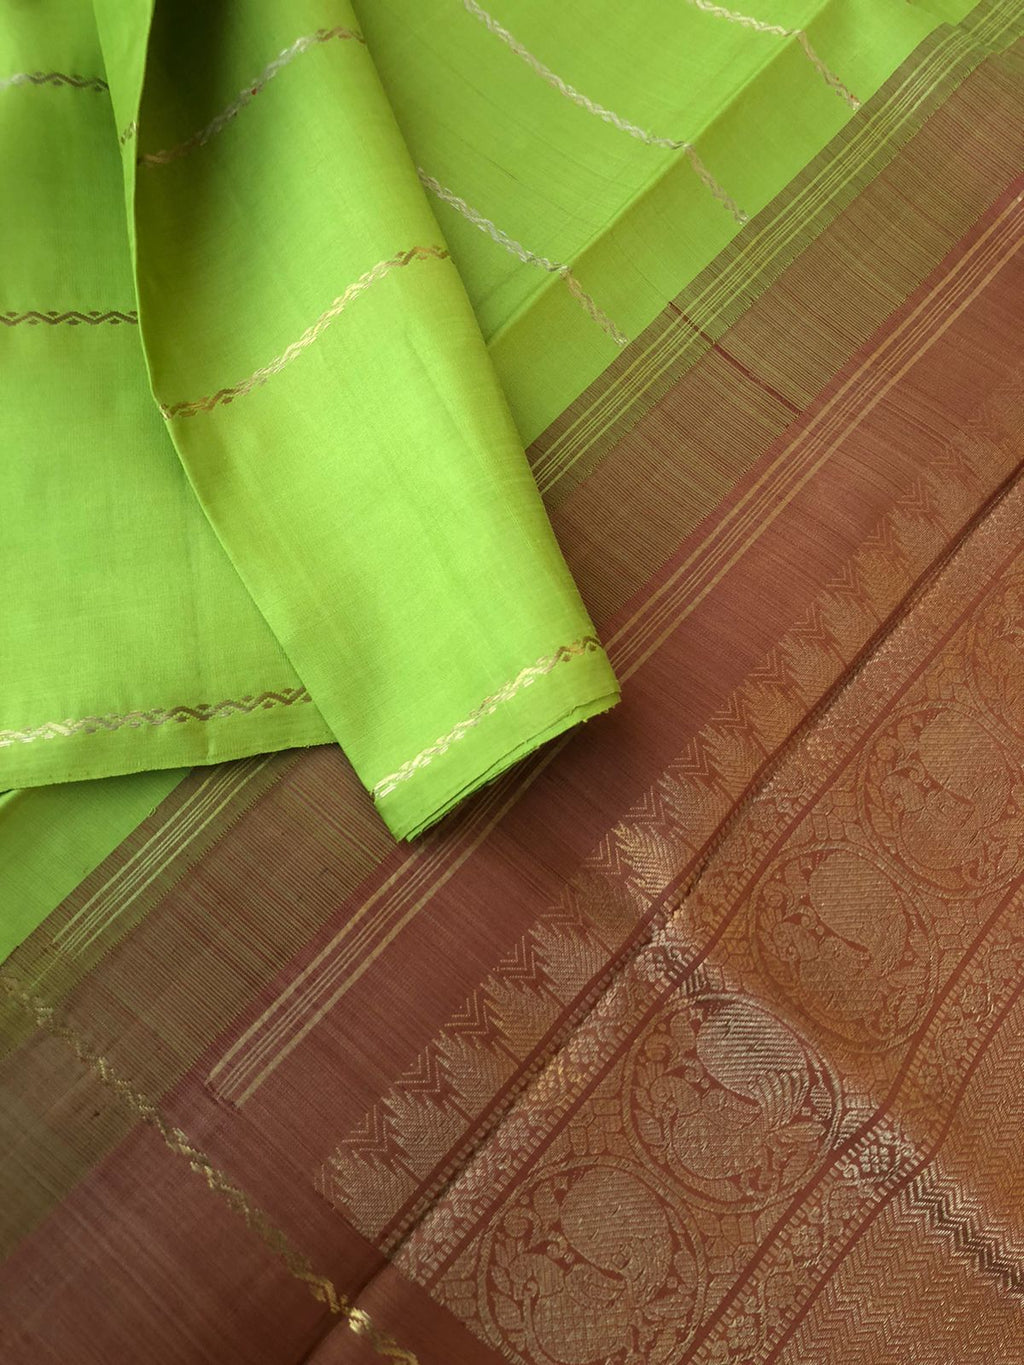 Vintage Ragas on Kanchivaram - fresh apple green veldhari woven body with rust chocolate brown pallu and blouse